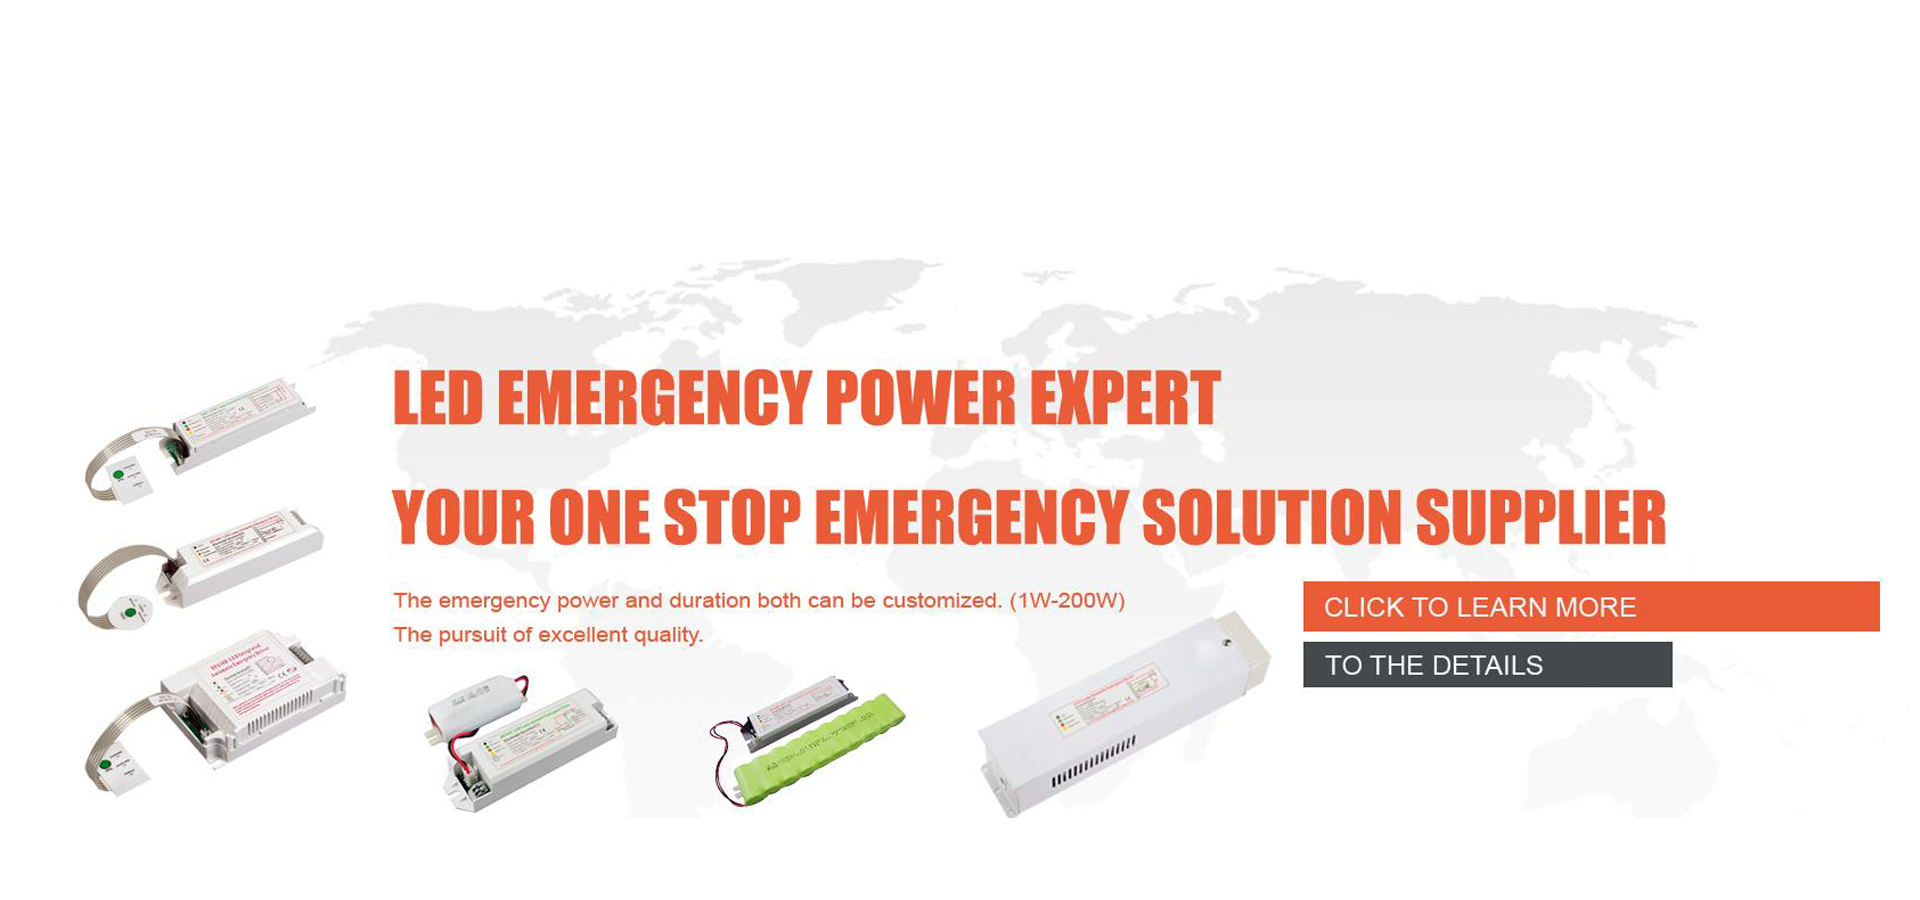 LED EMERGENCY POWER EXPERT KOU KEKAHI HALE EMERGENCY SOLUTION SUPPLIER